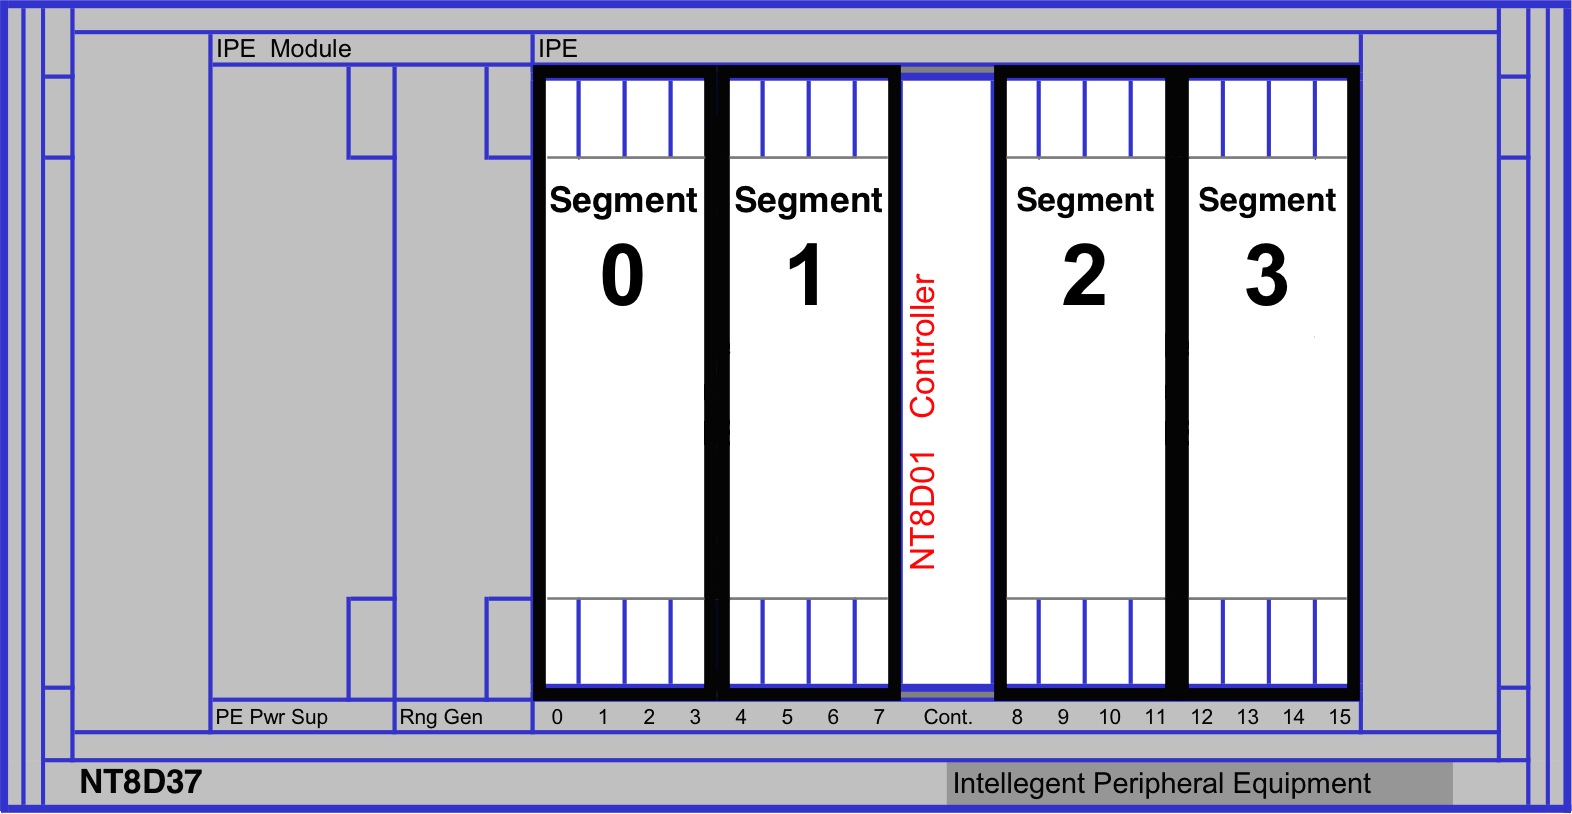 NT8D37 IPE Module Segments